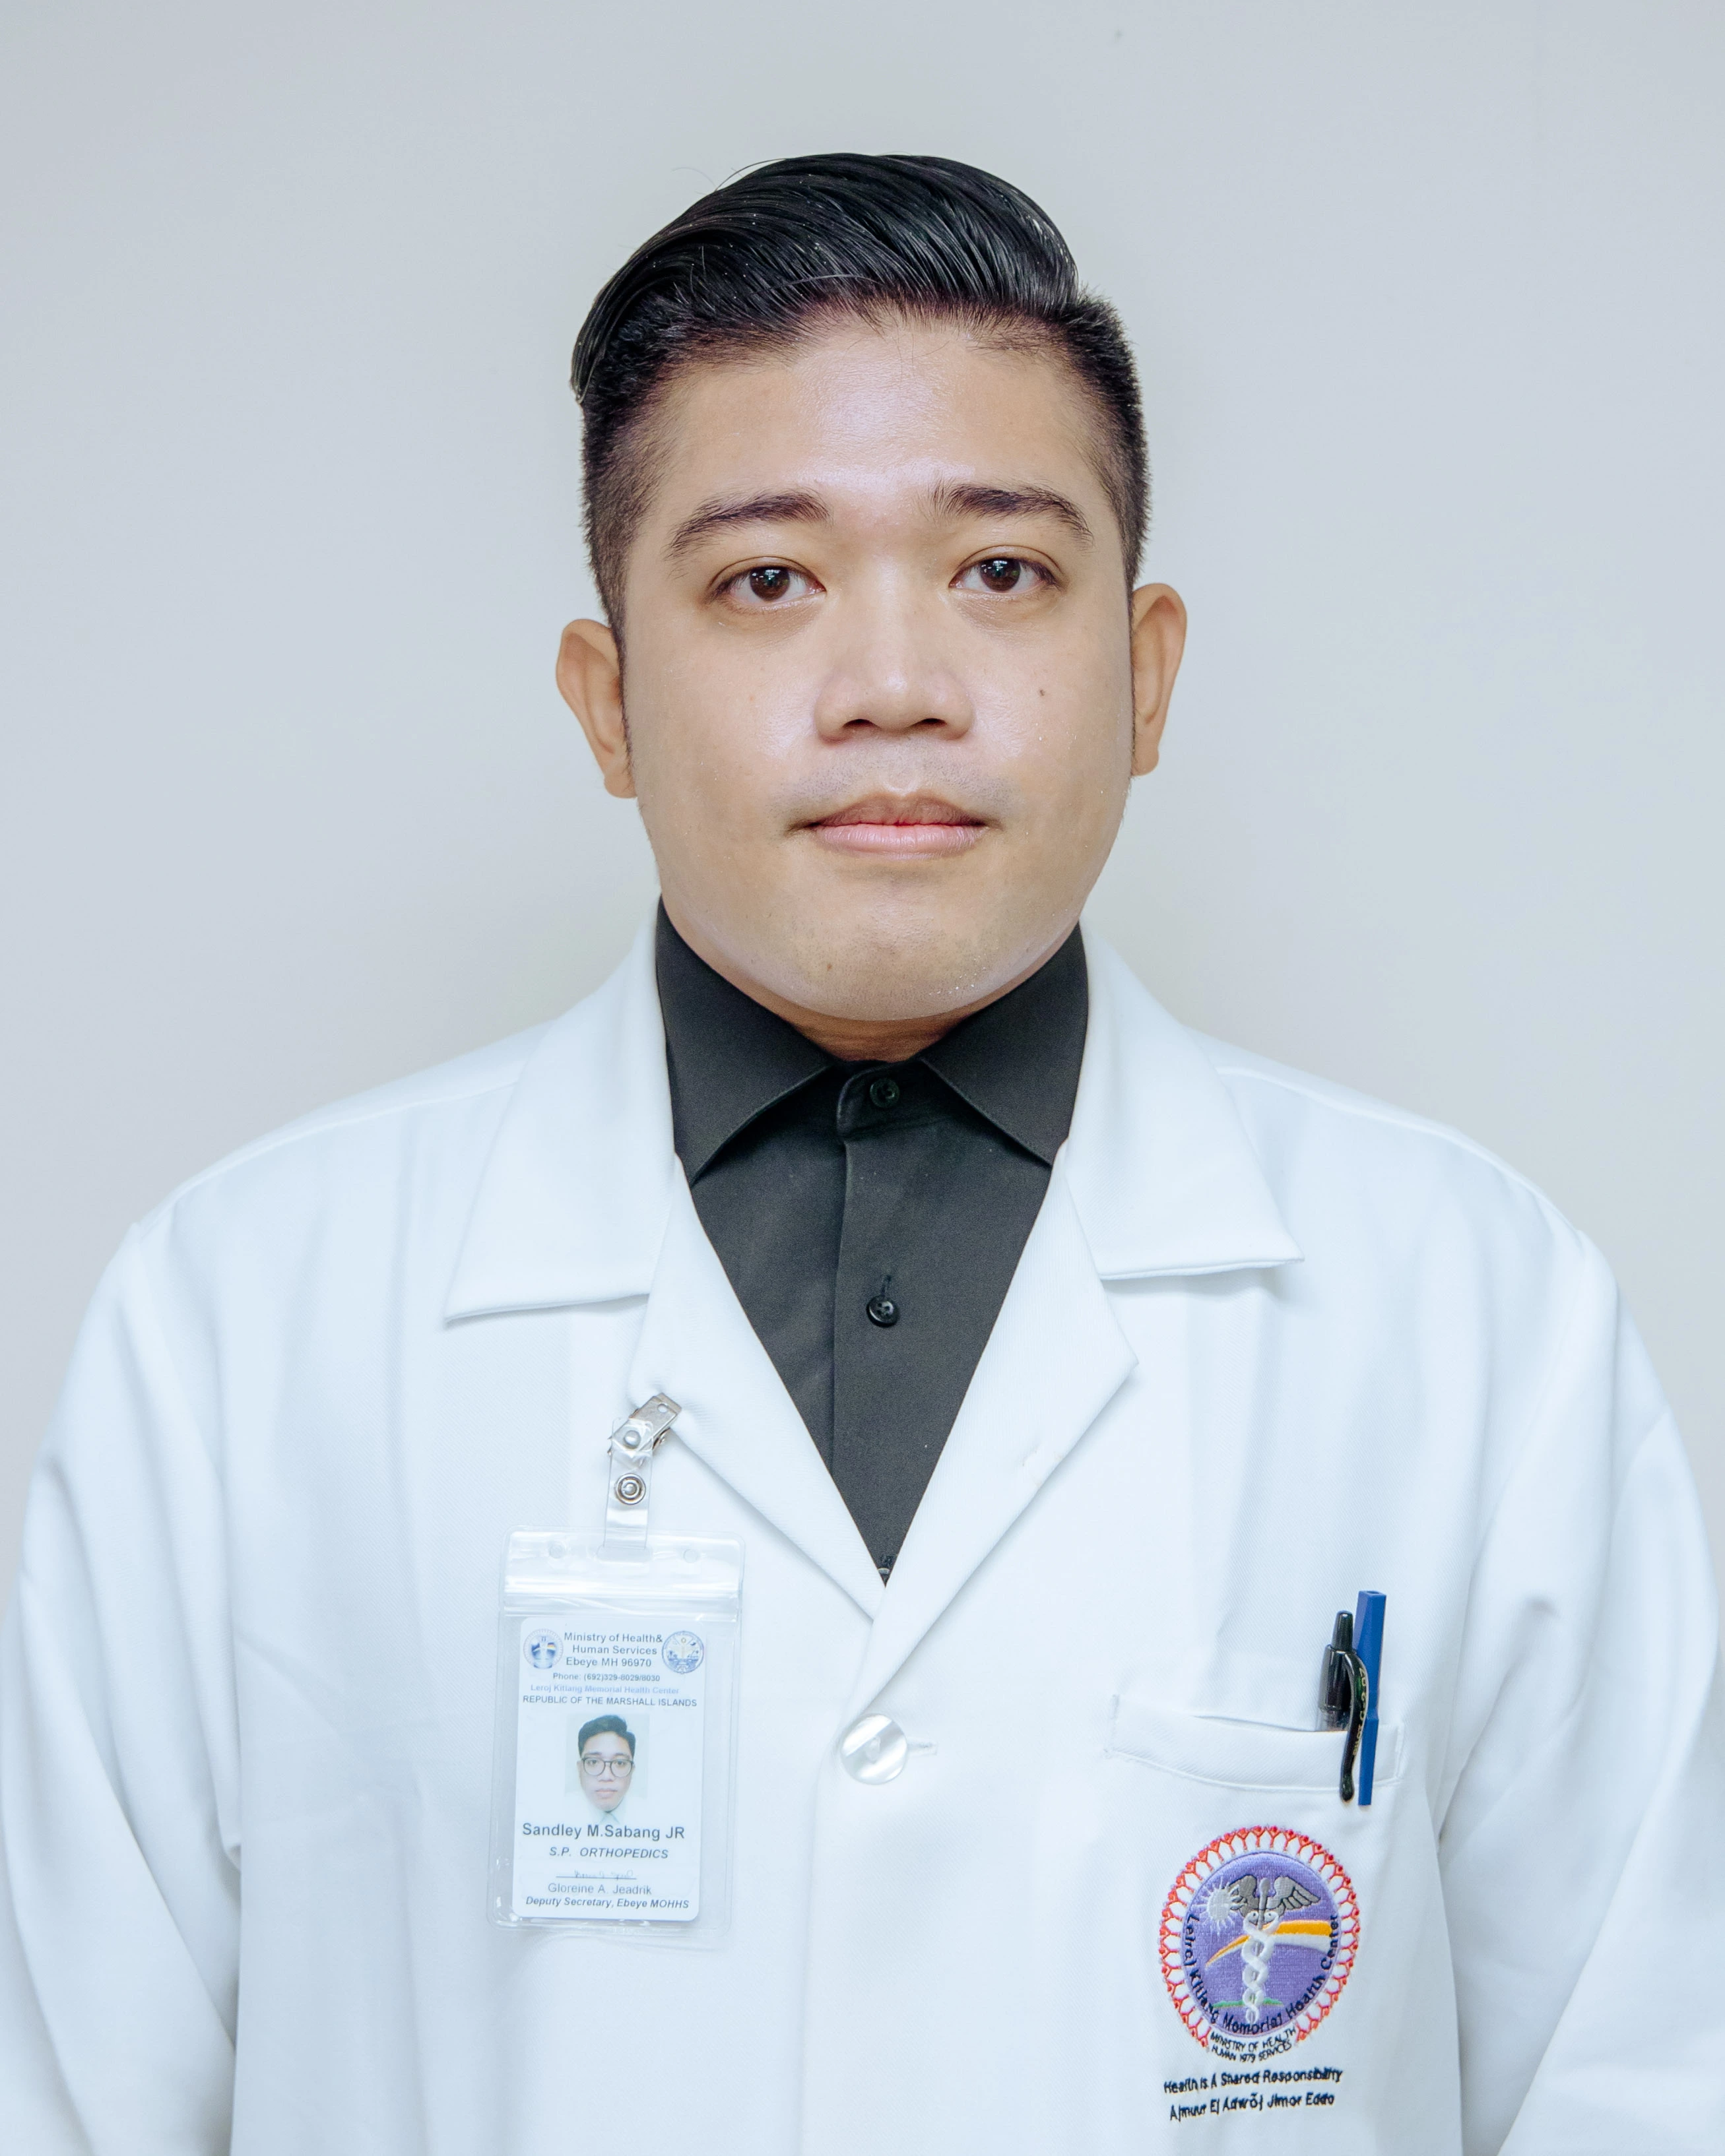 Dr. Sandley Sabang Jr.